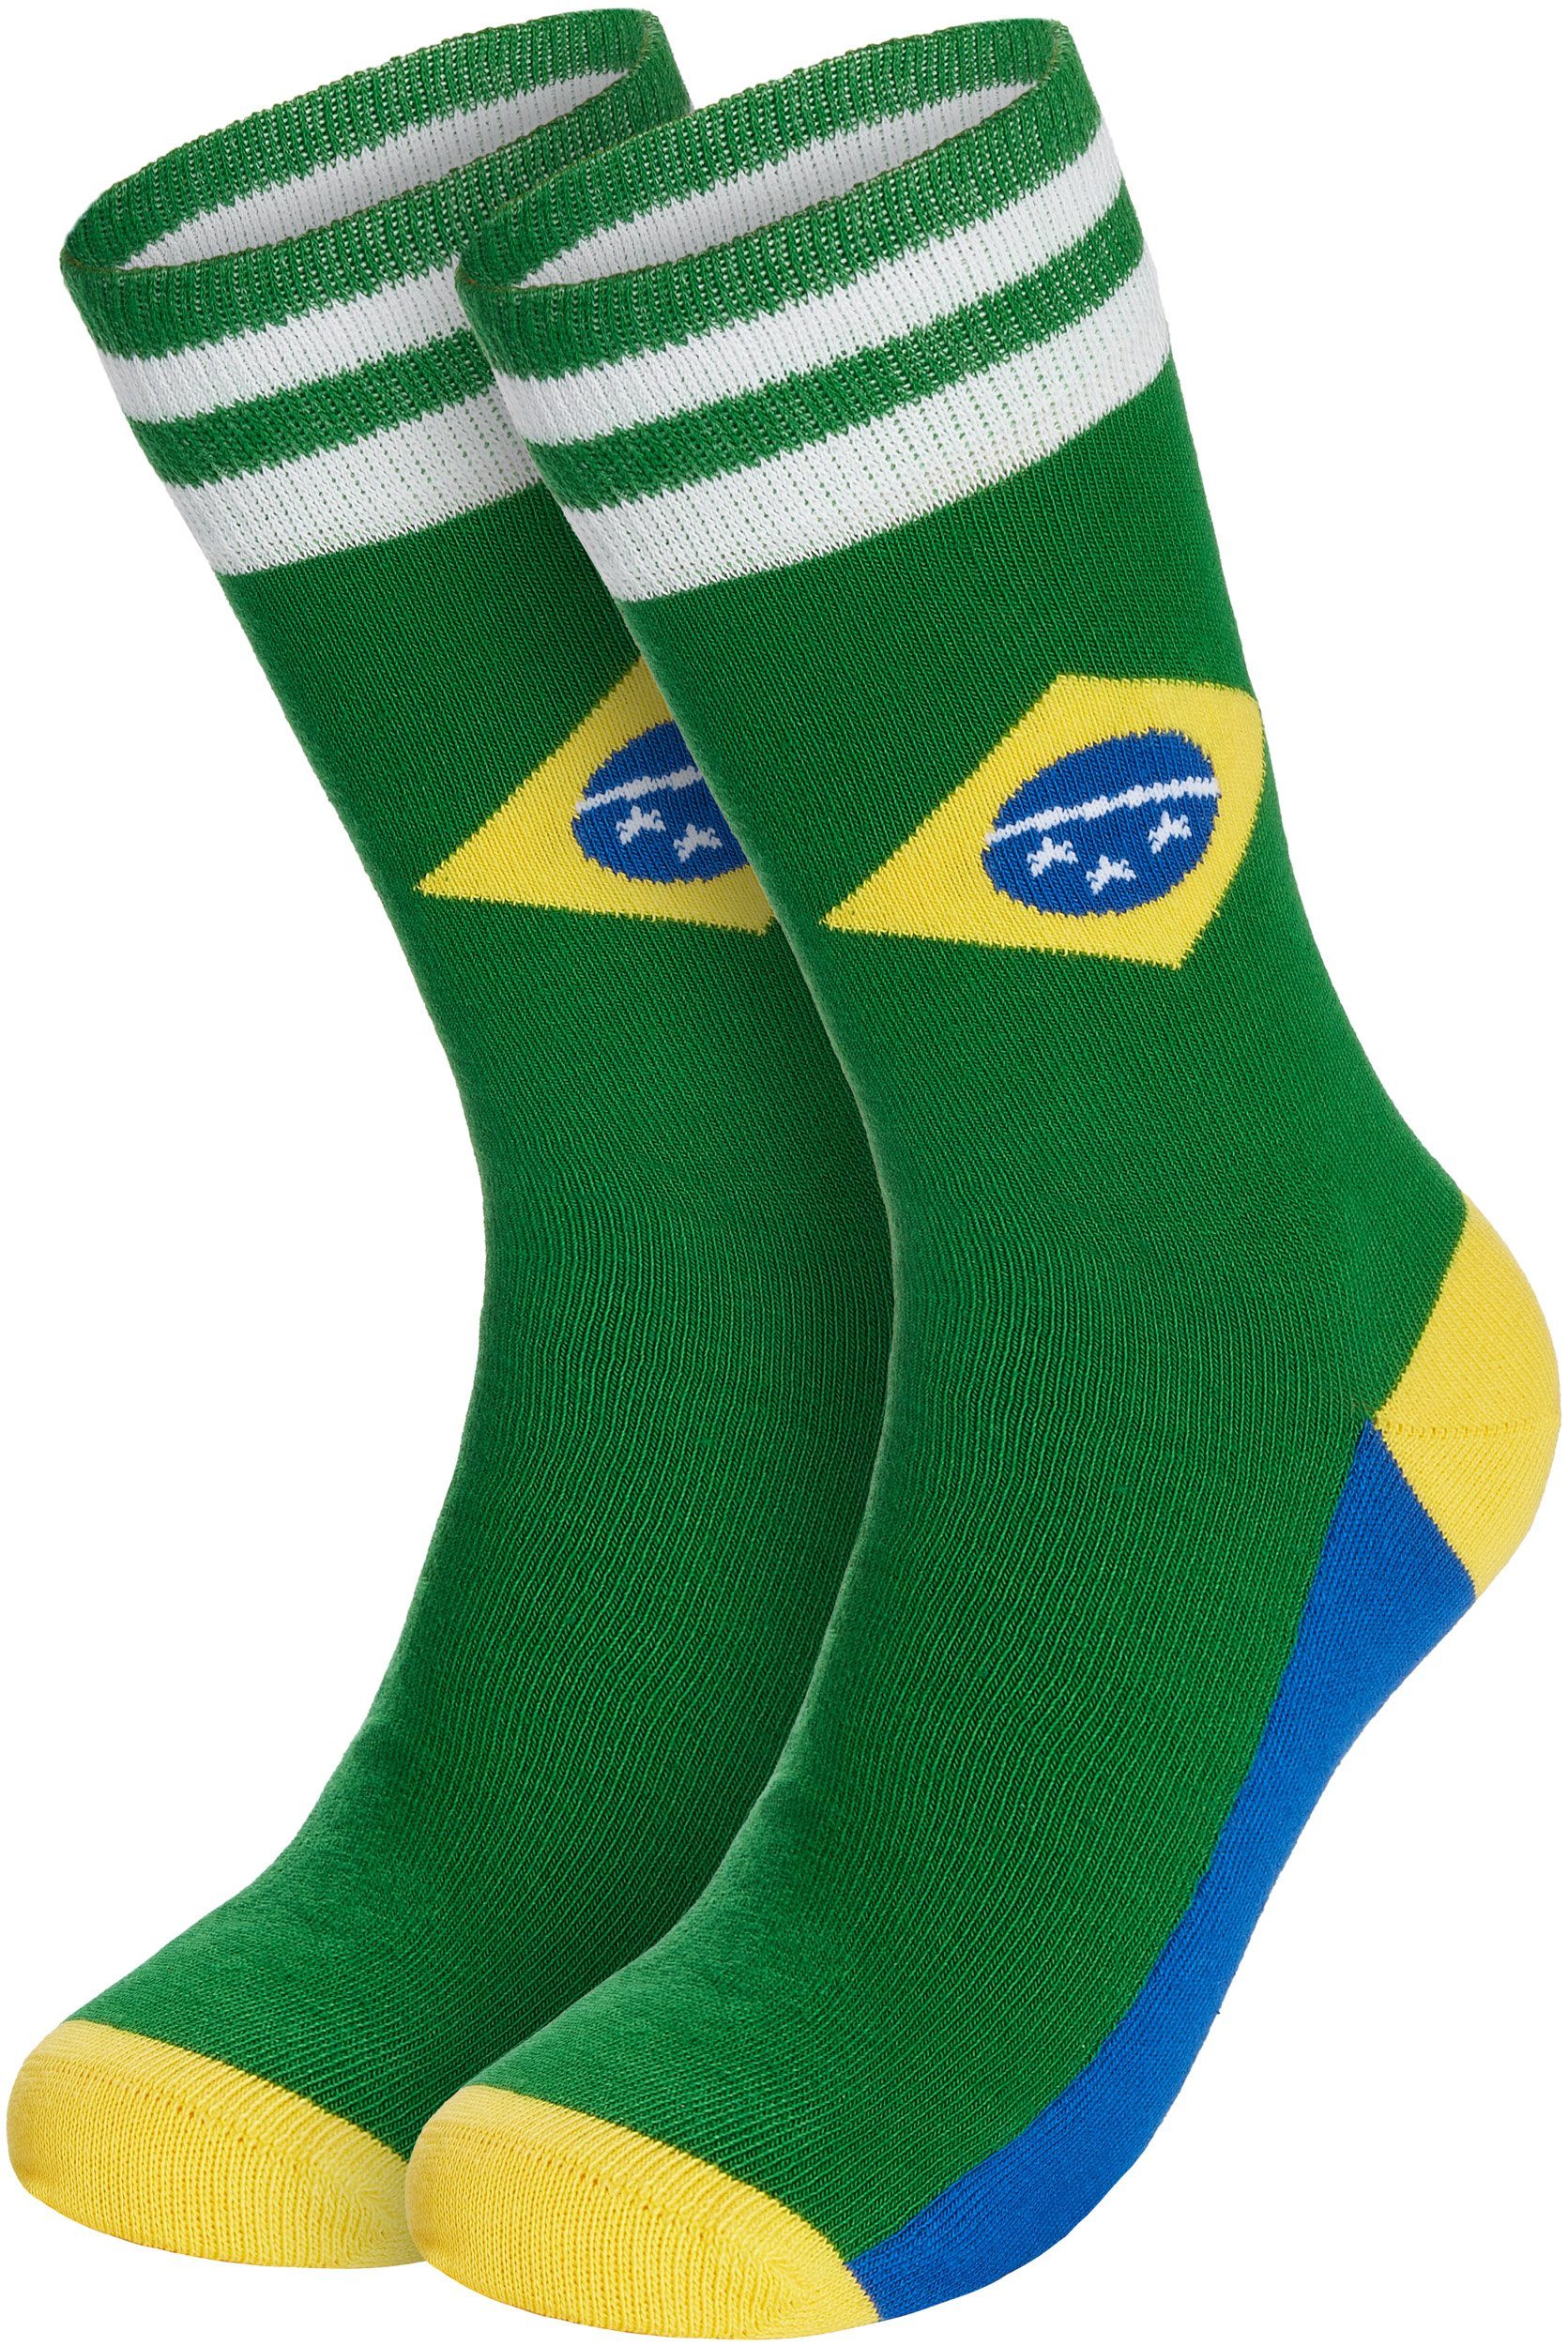 BRUBAKER Socken Herren Fan Socken - Flagge/Fahne - Lustiges Motiv Männer Crew-Socken (One Size Geschenk für Fußball-Fans Fußballer - USA Brasilien Argentinien, 1-Paar) Socken Lustig - Weltmeisterschaft Nationalflagge